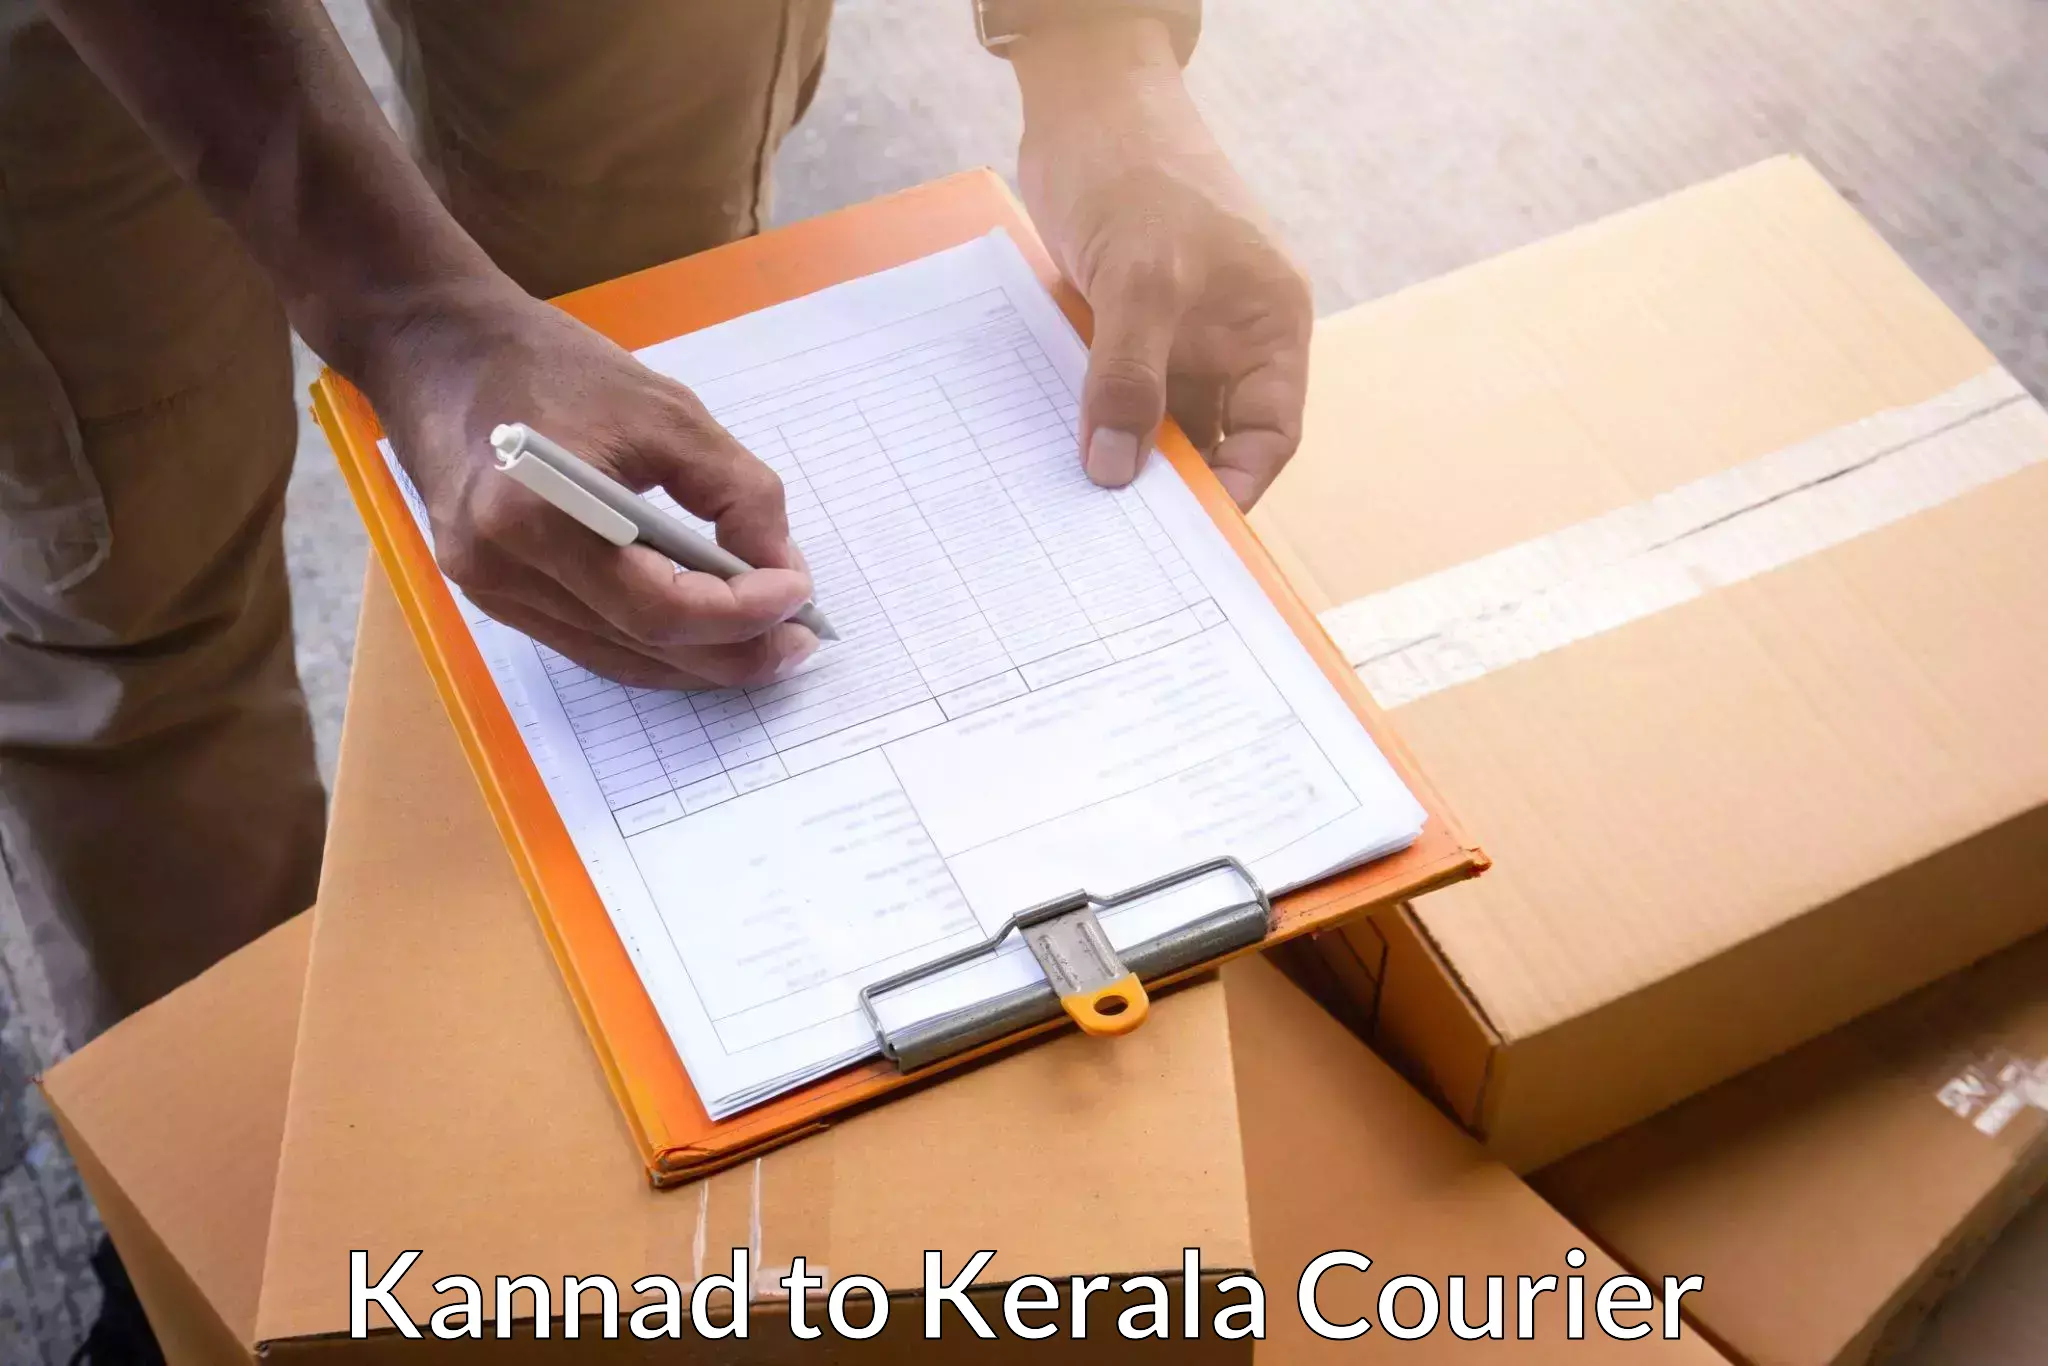 Seamless shipping experience Kannad to Cochin Port Kochi